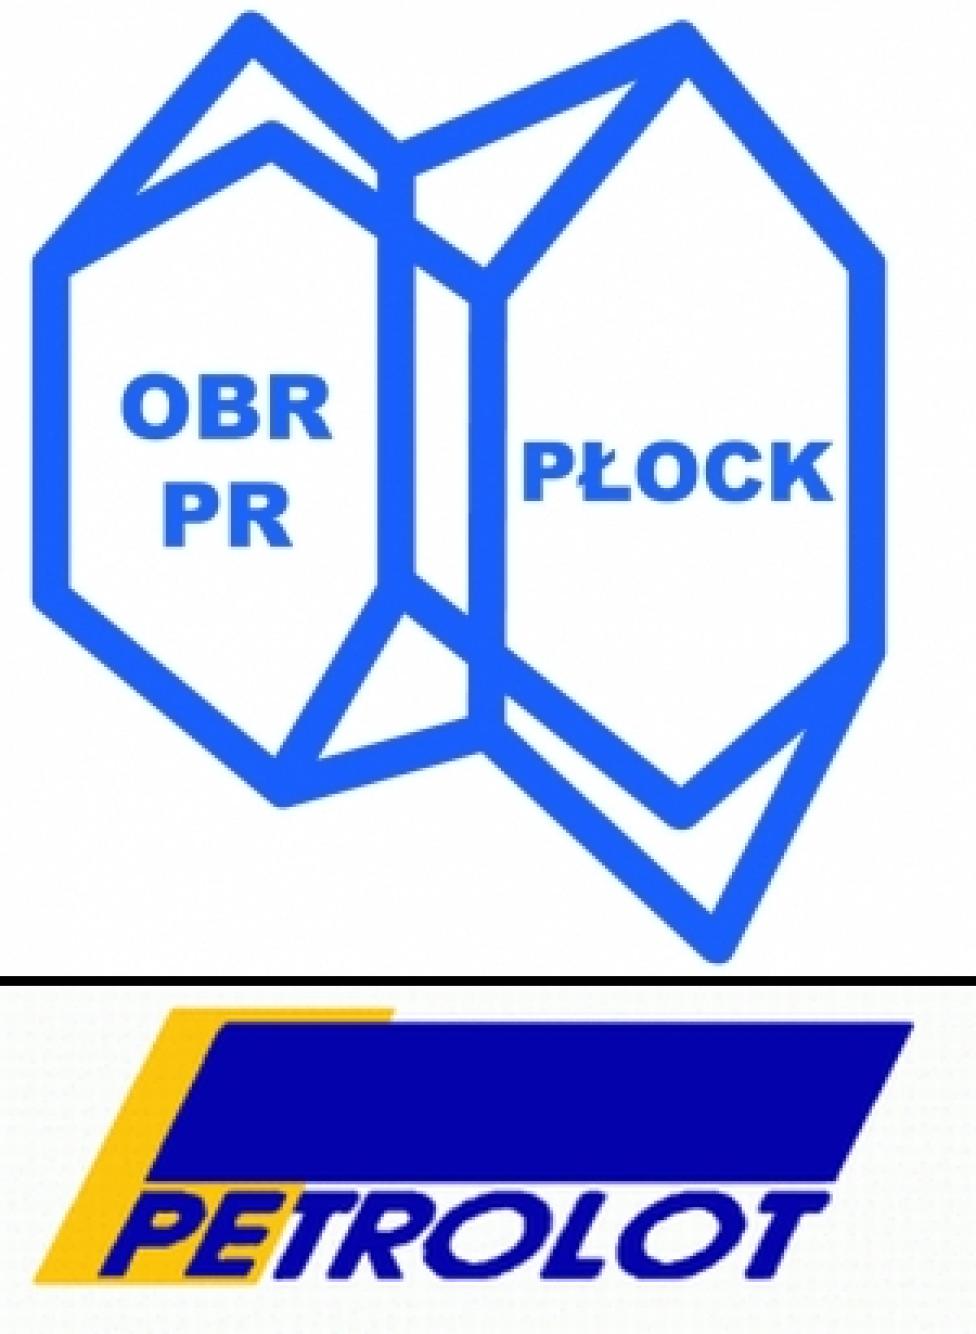 OBR Płock / Petrolot